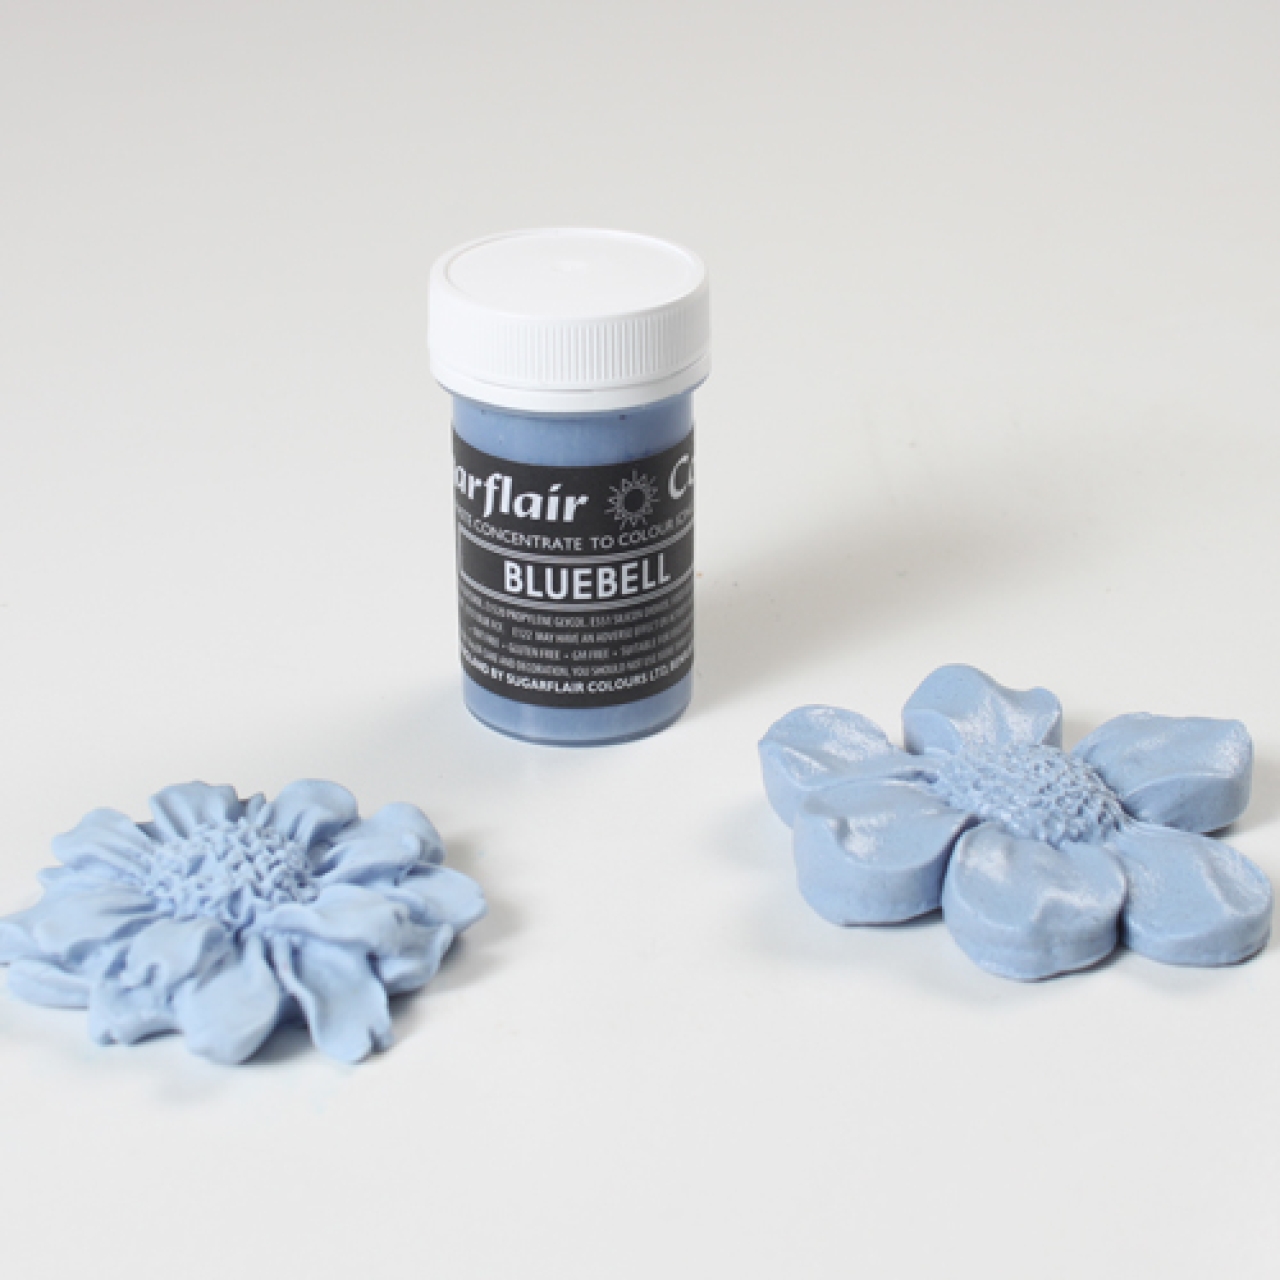 Sugarflair Profi Lebensmittelfarbe Bluebell, babyblau, 25 g